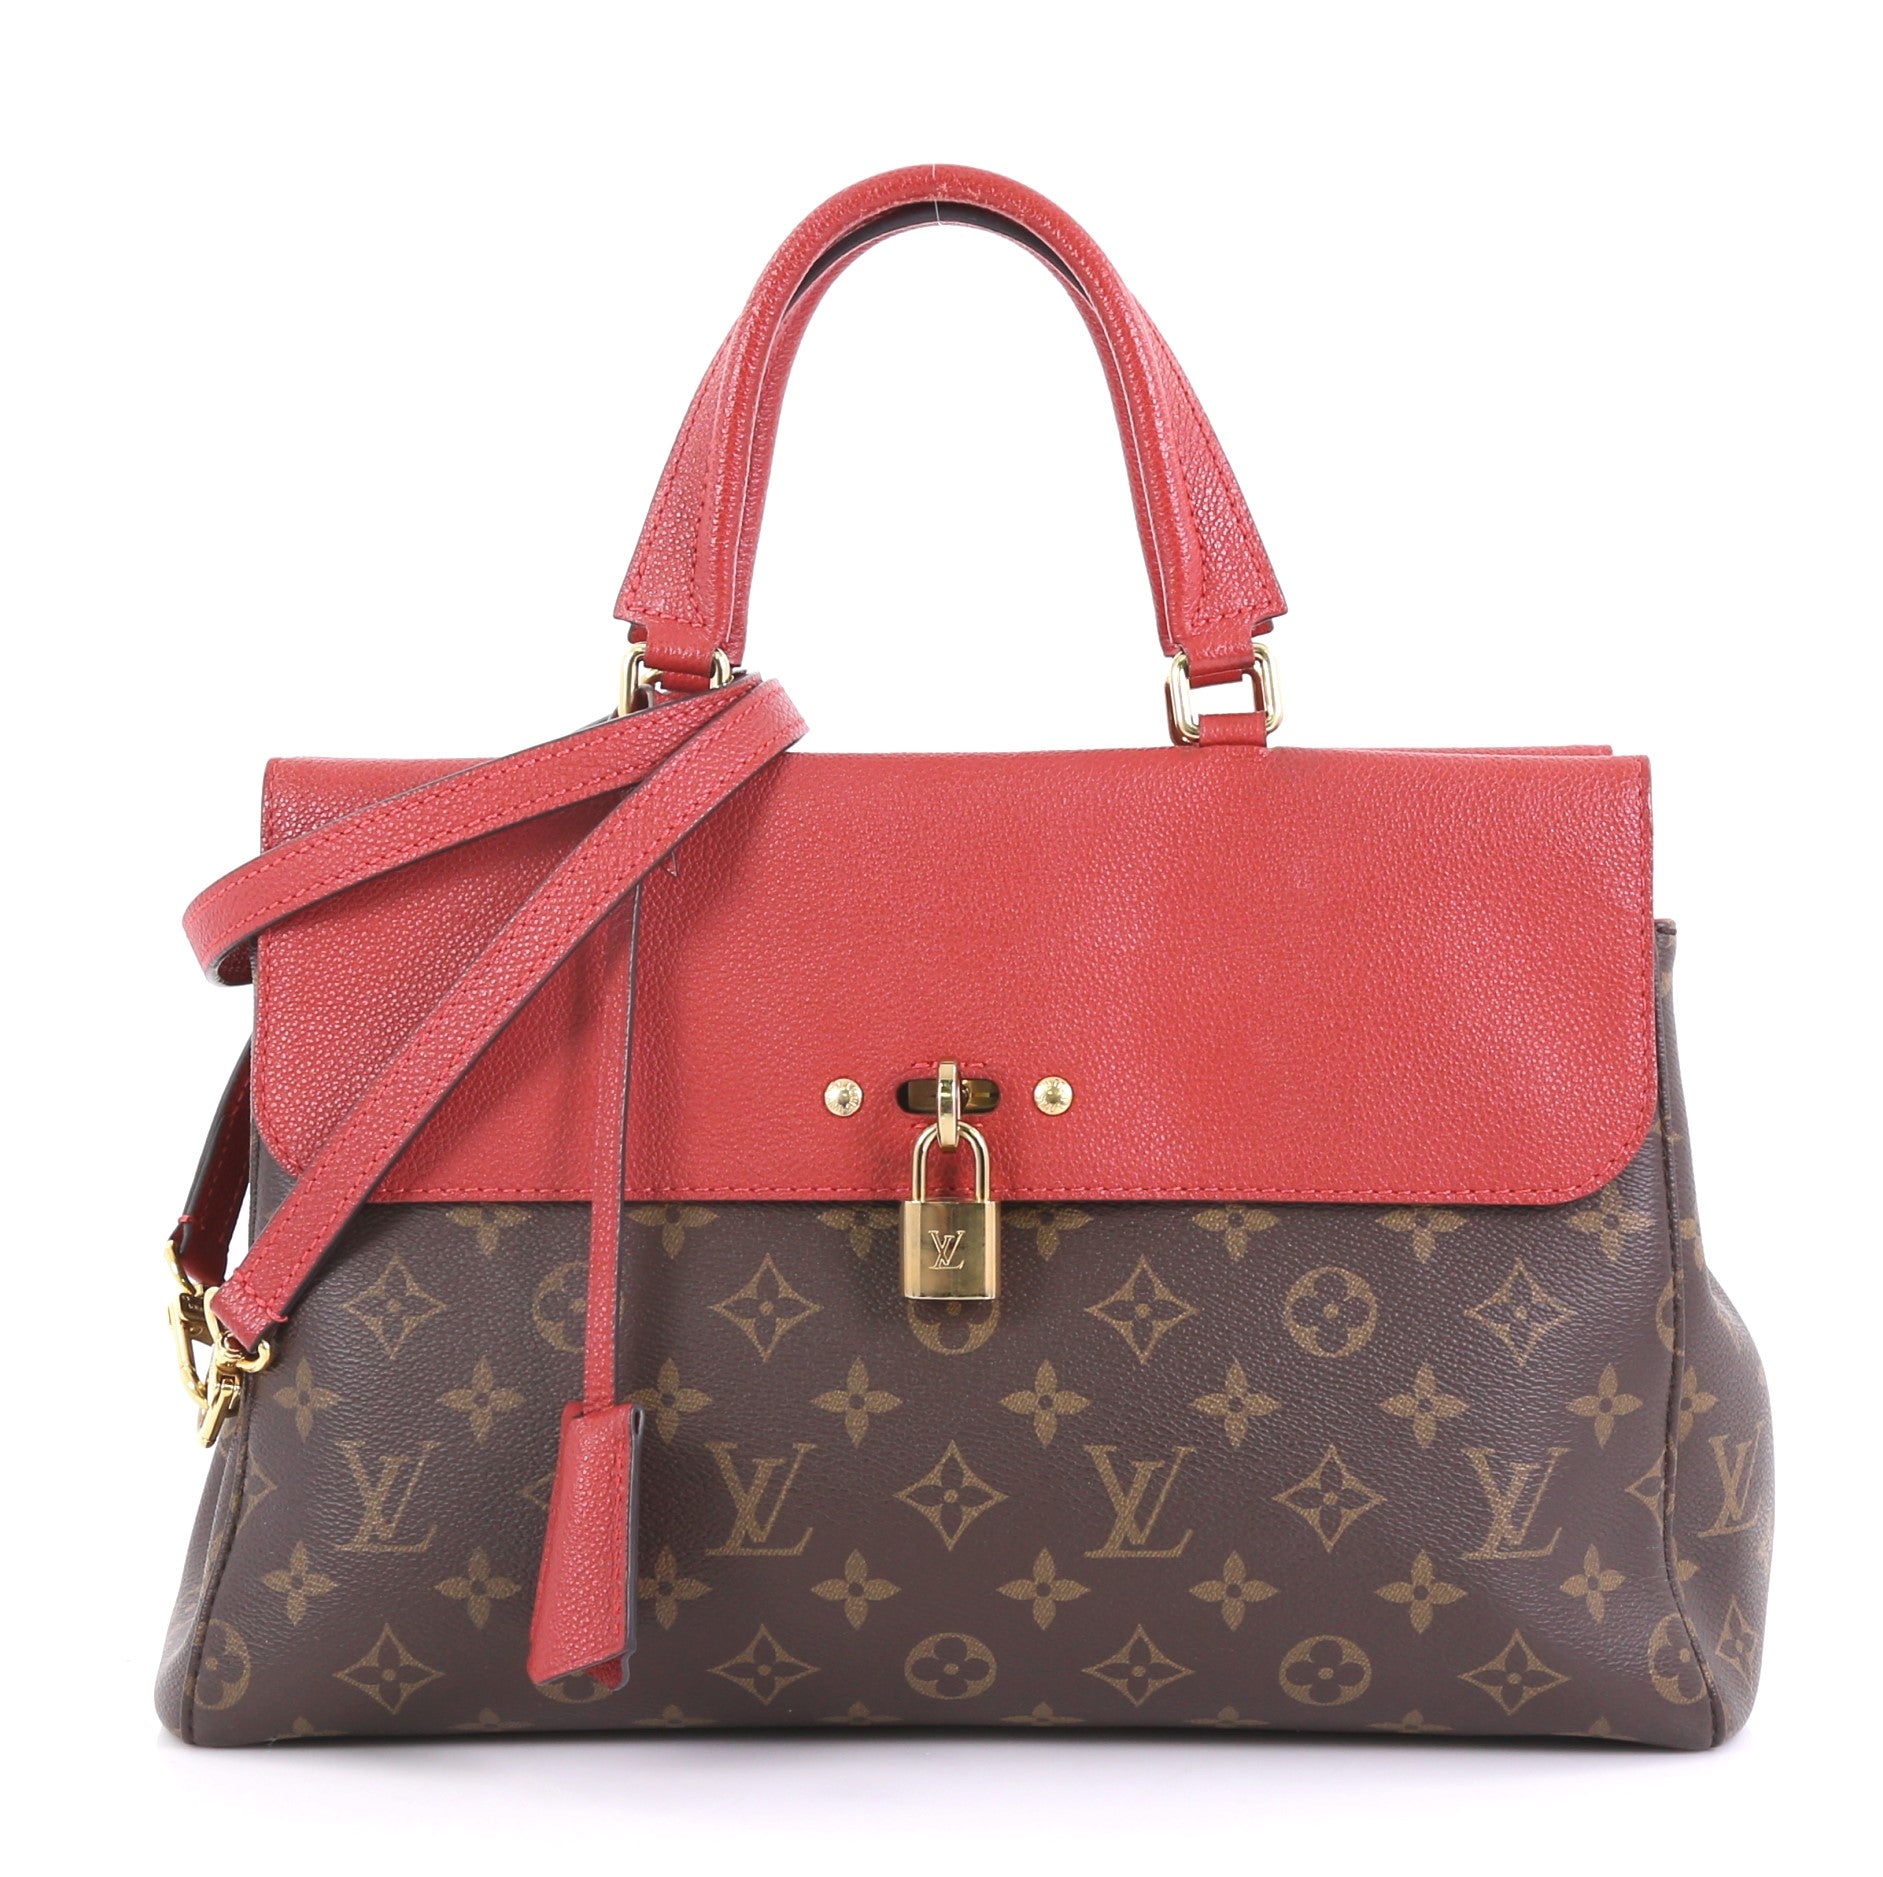 New Statement Bag: Louis Vuitton Bowling Vanity Tuffetage Bag.  Cheap  louis vuitton handbags, Louis vuitton purse, Louis vuitton bag